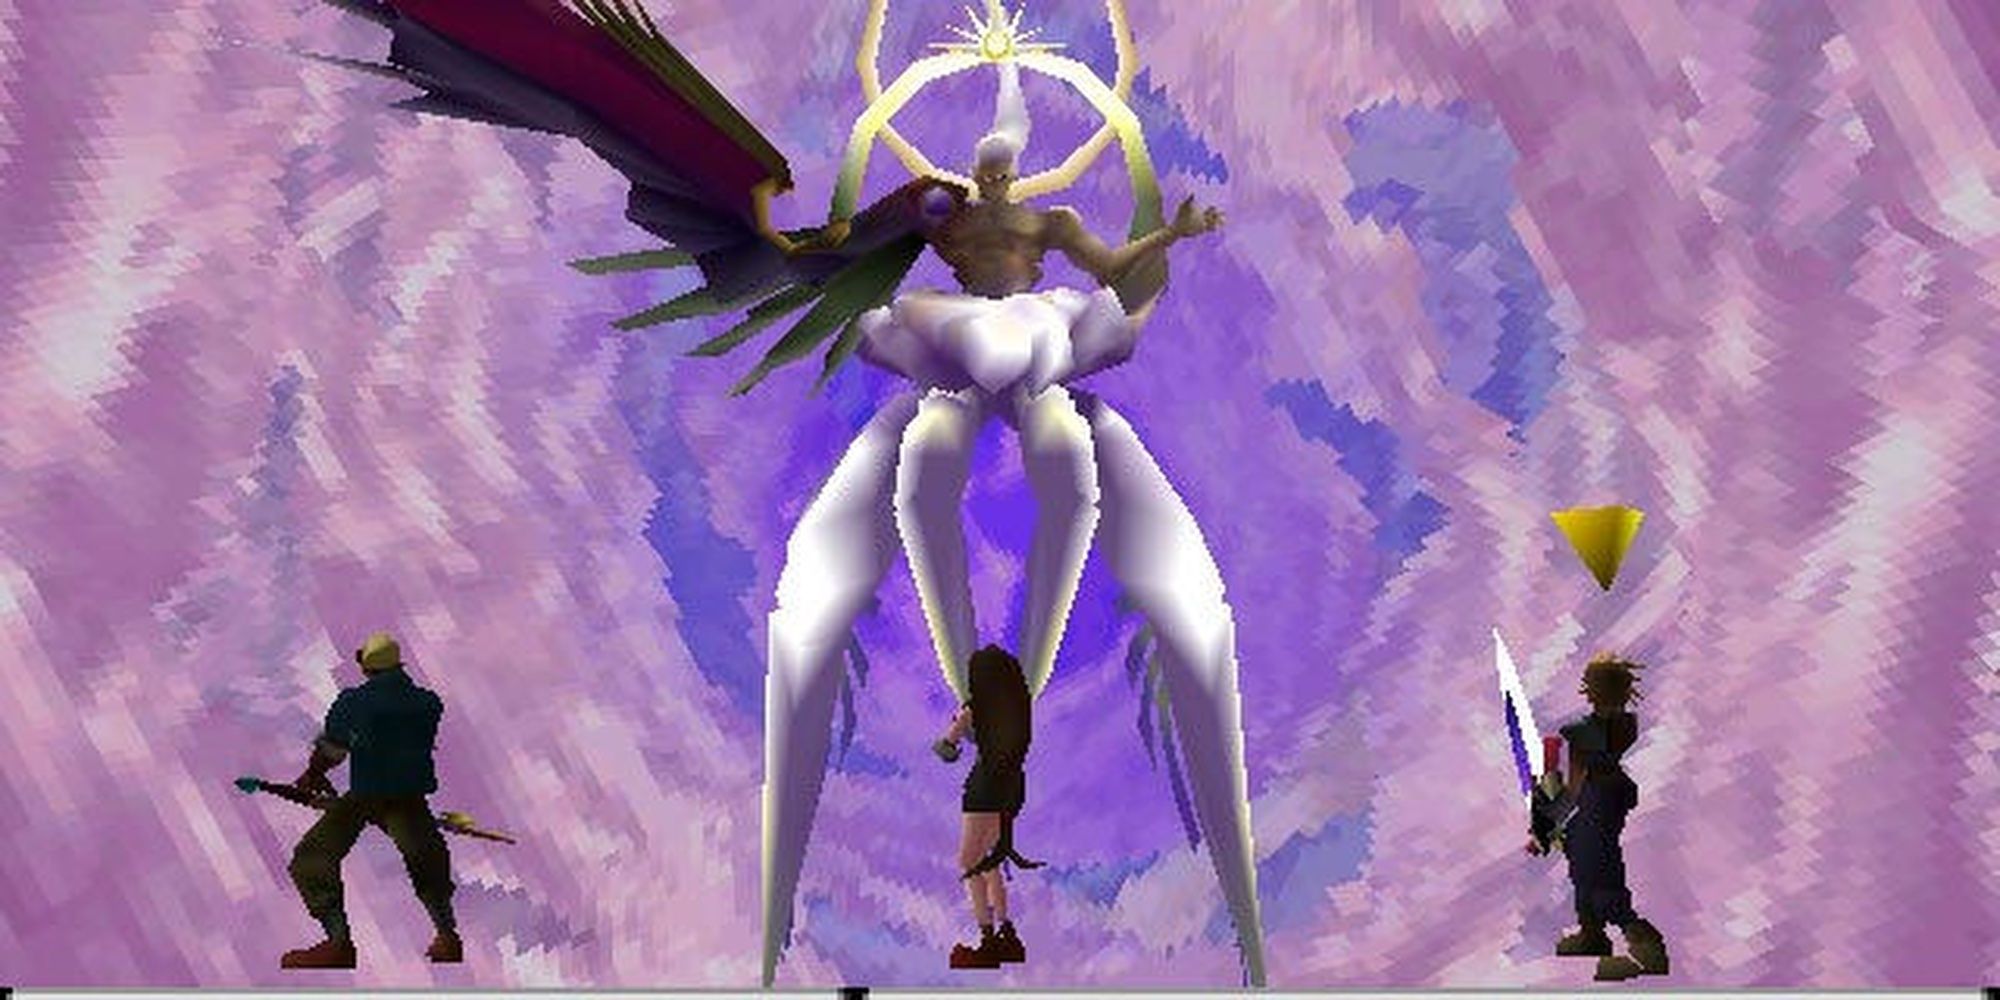 Cid Highwind, Tifa Lockhart, and Cloud Strife battle Sephiroth in Final Fantasy 7